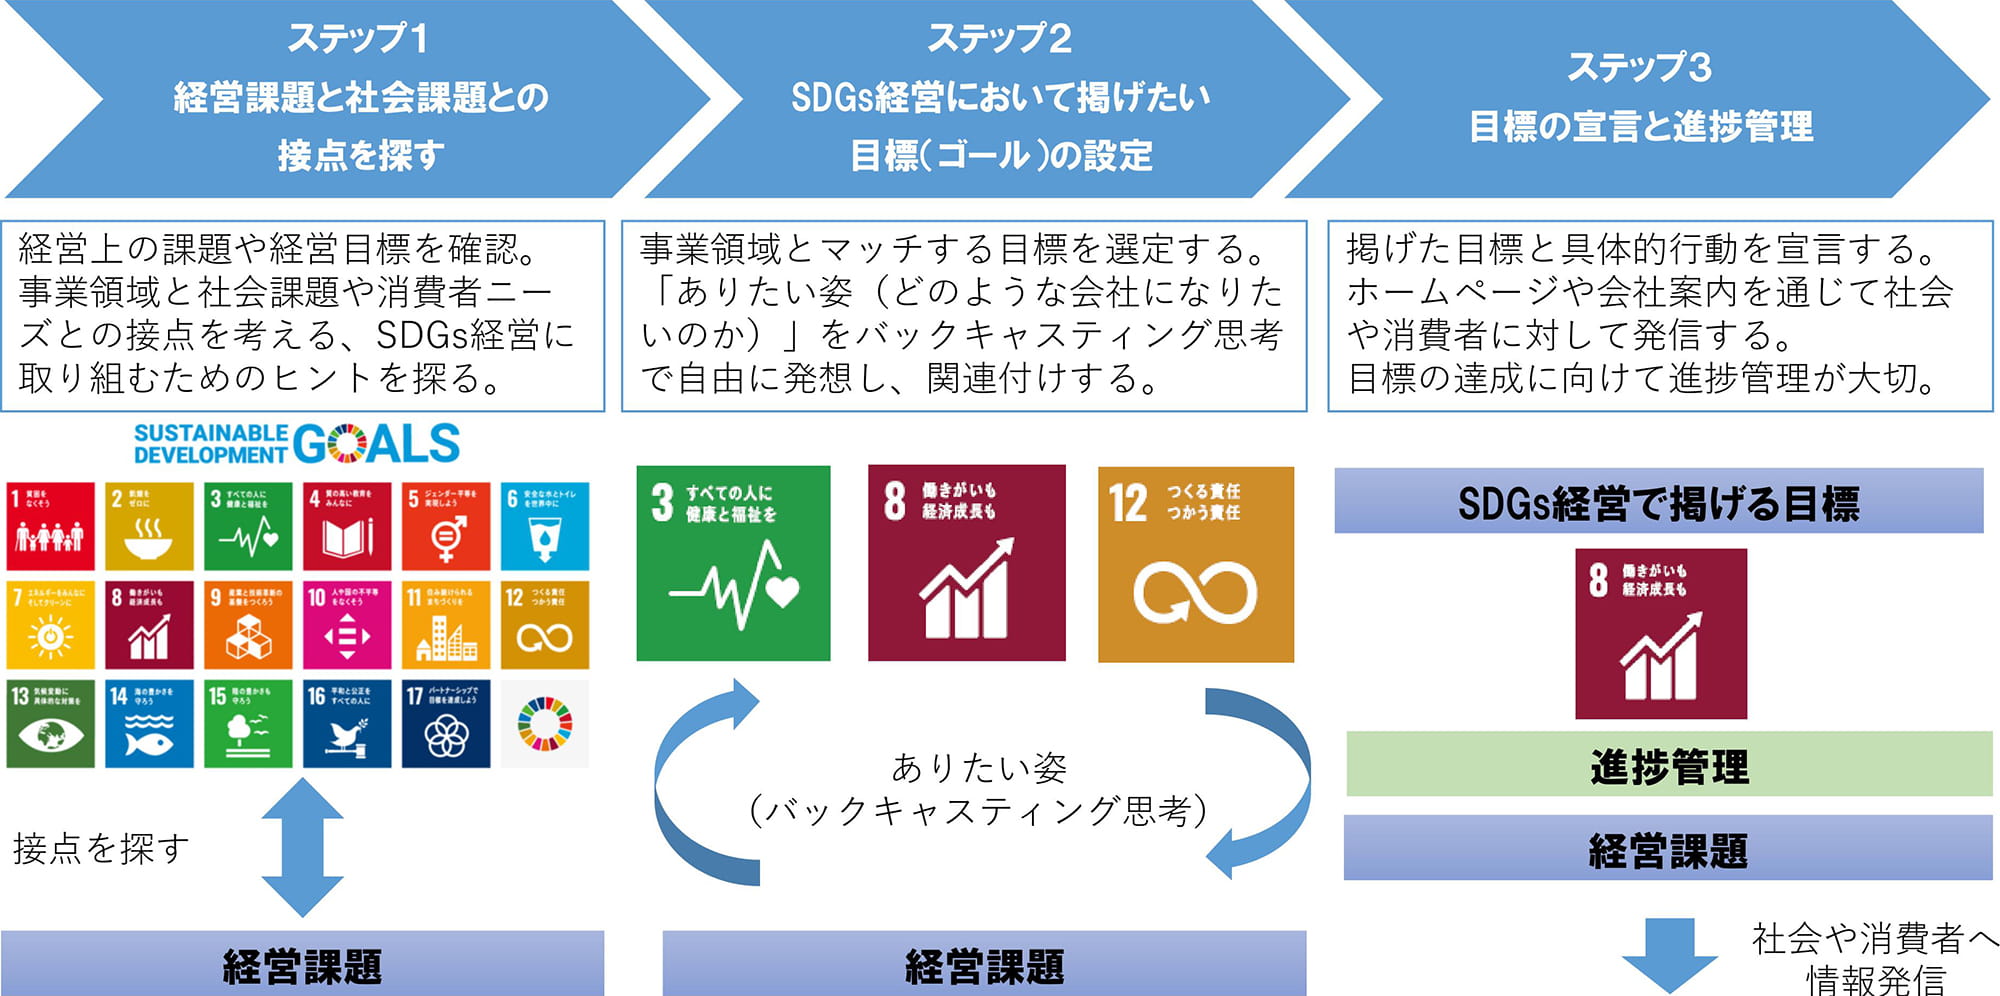 SDGs経営に取り組むためのアプローチ方法（一例）